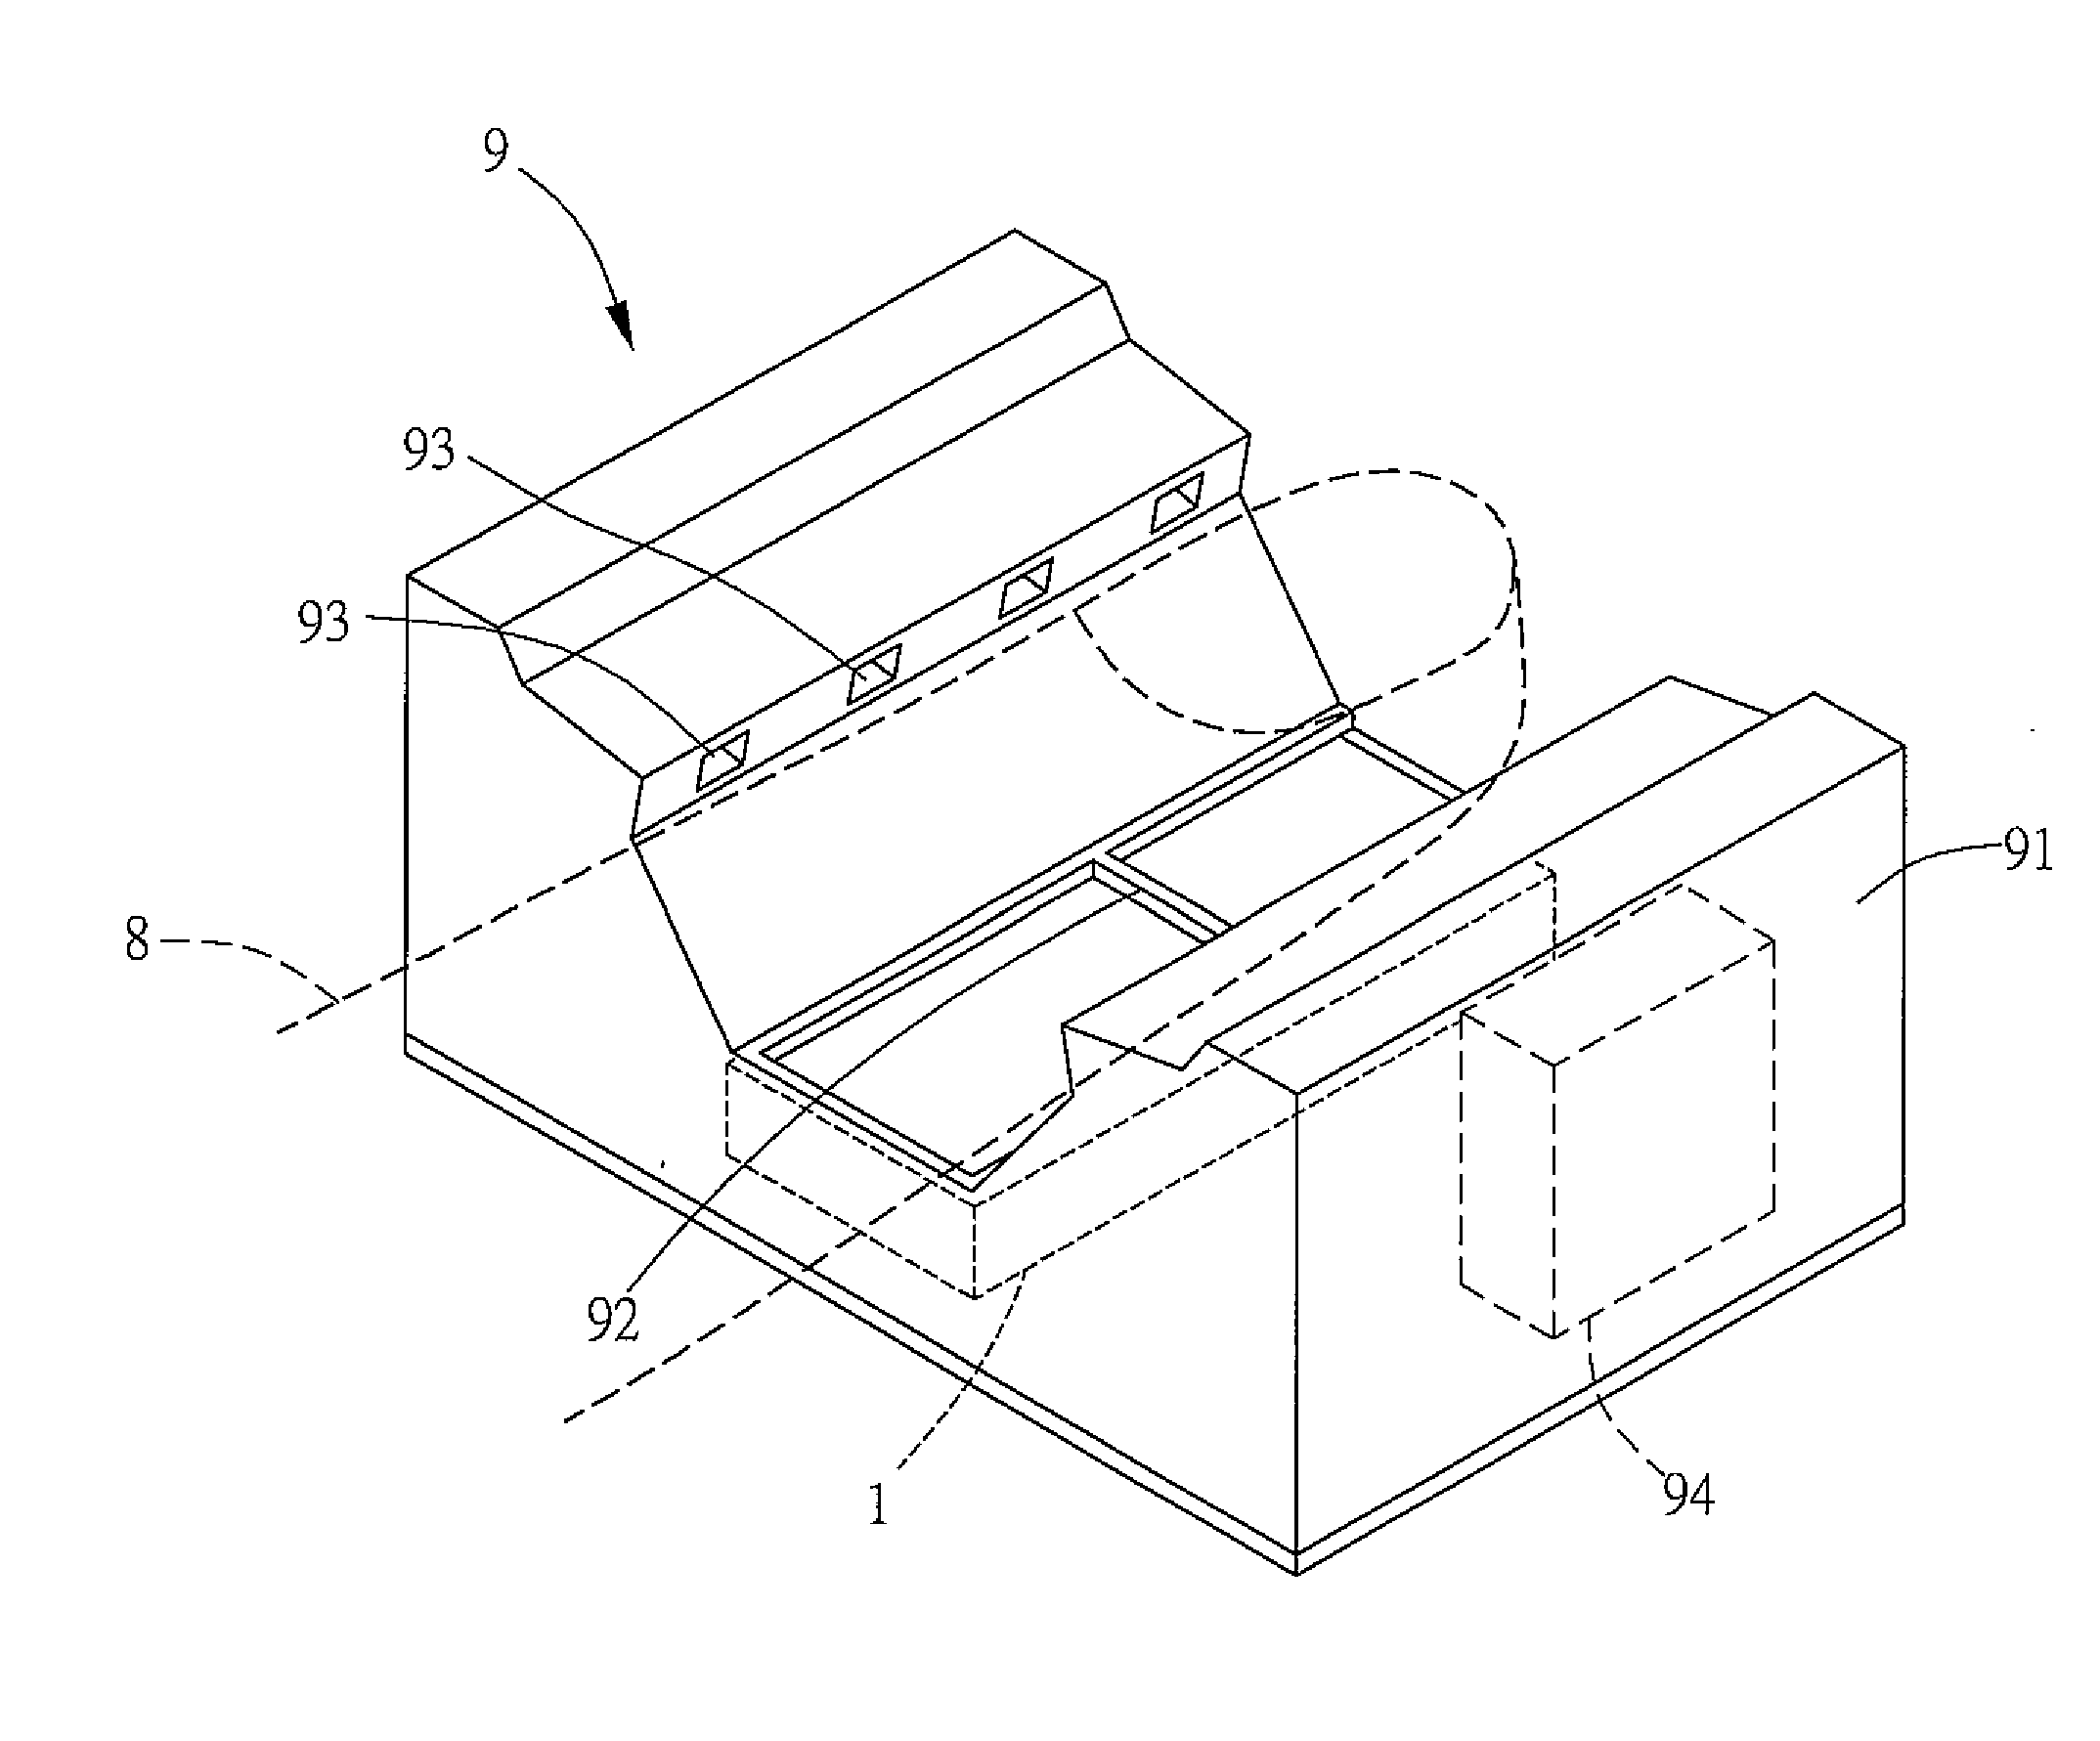 Thin Optical Imaging module of a Biometric Apparatus